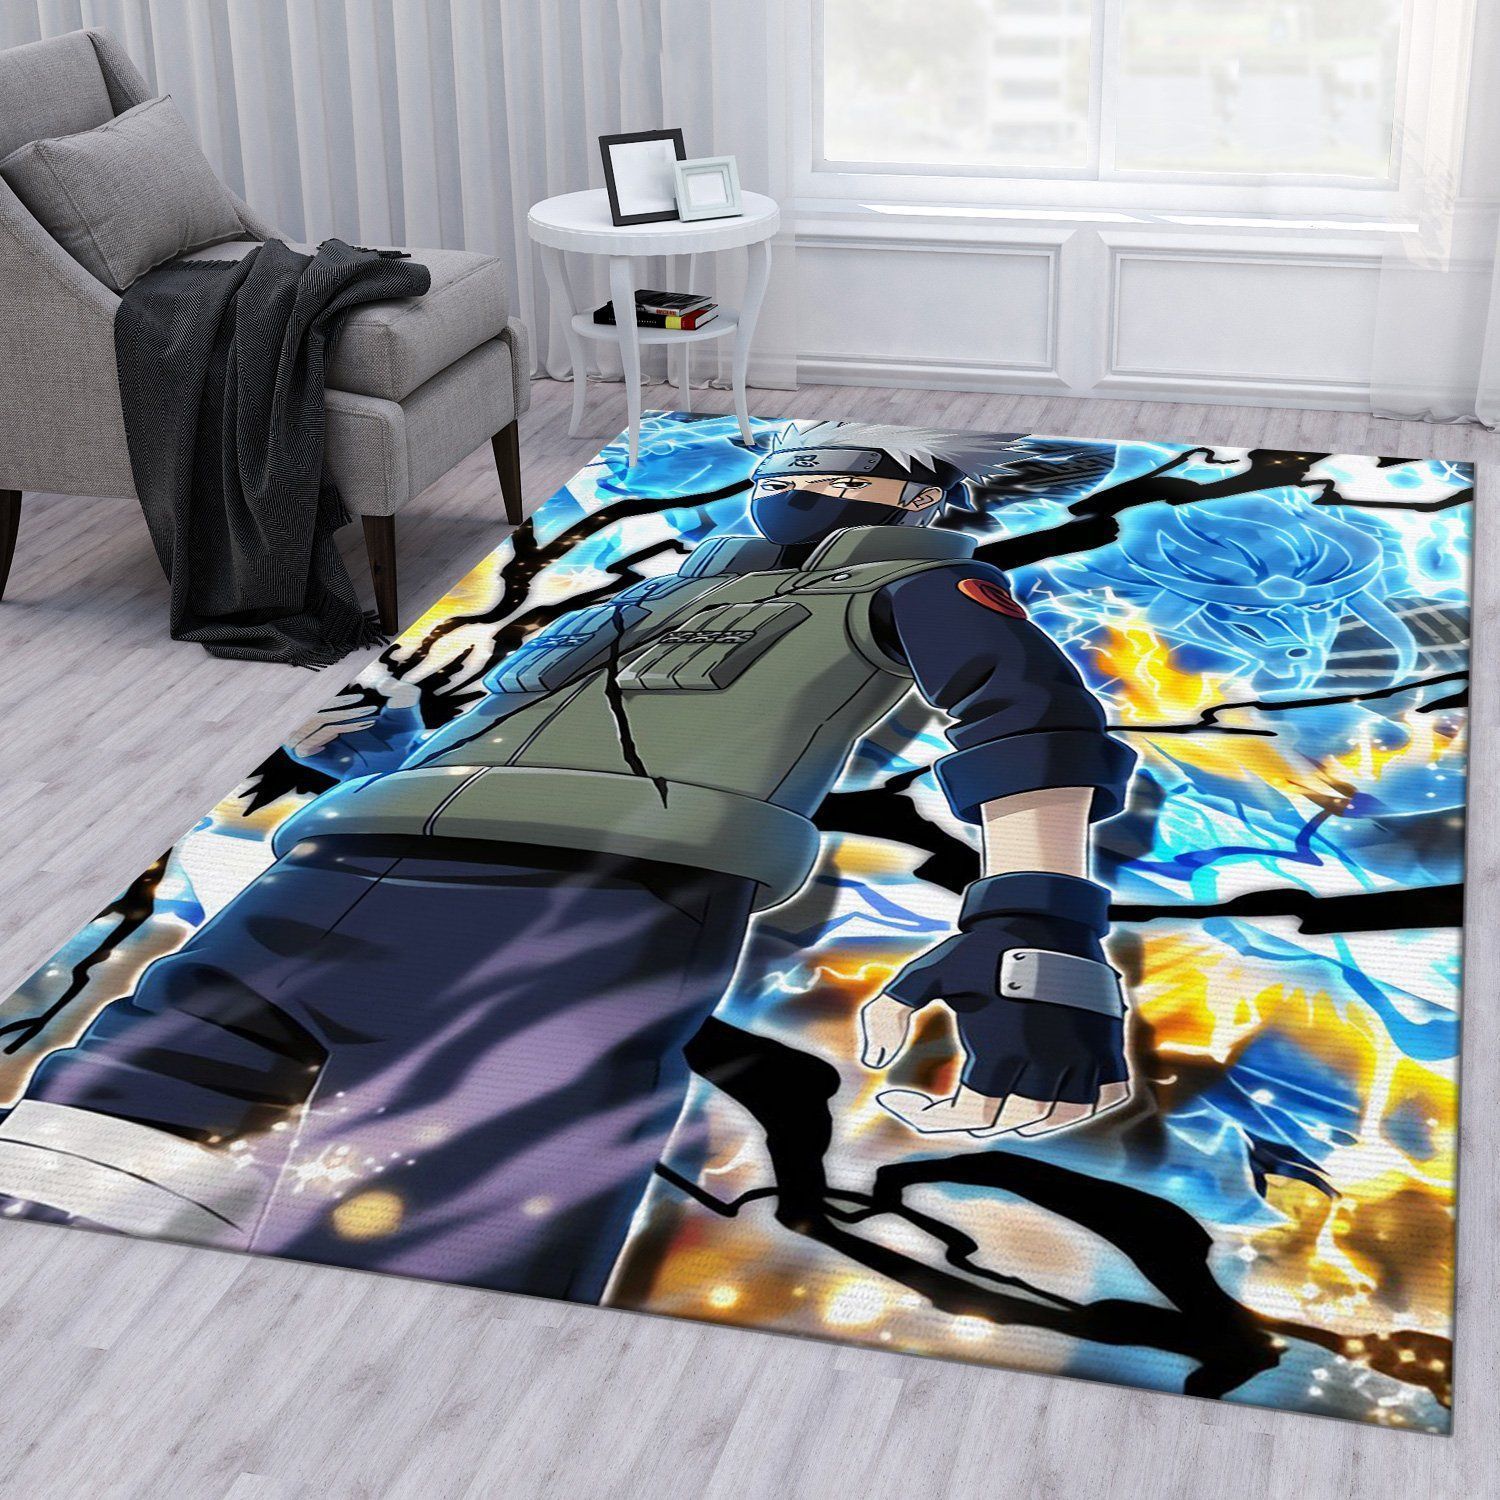 Kakashi Anime Area Rug Bedroom Rug US Gift Decor - Indoor Outdoor Rugs